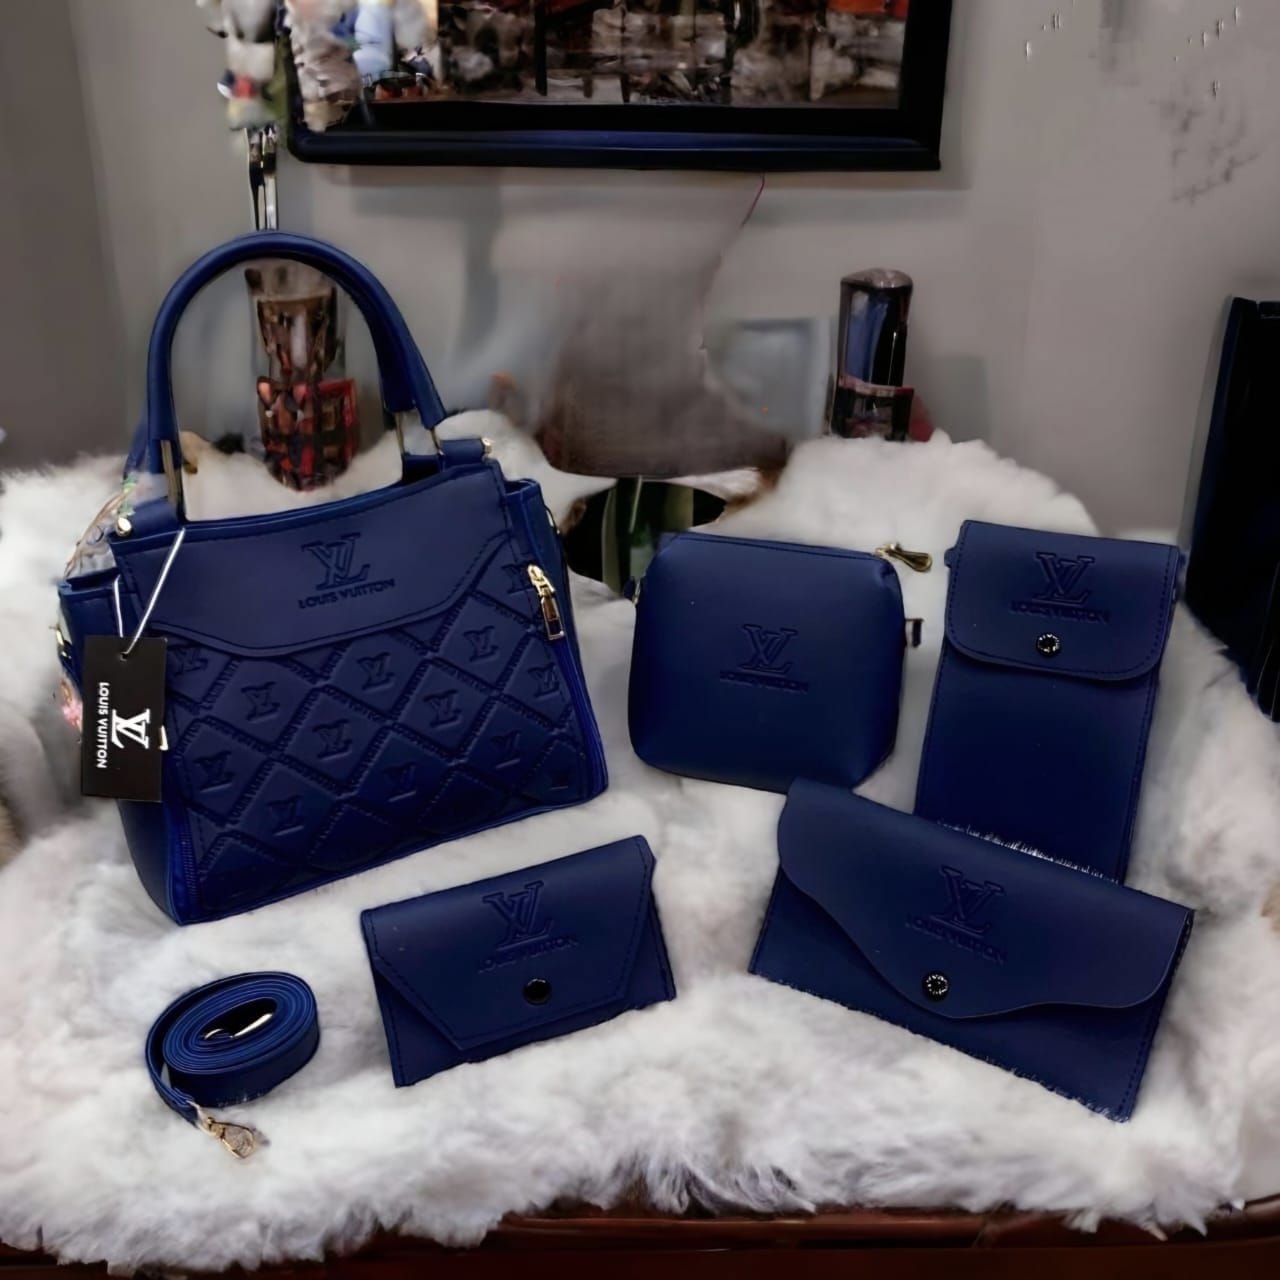 Amazing 5 Pcs Bag Set